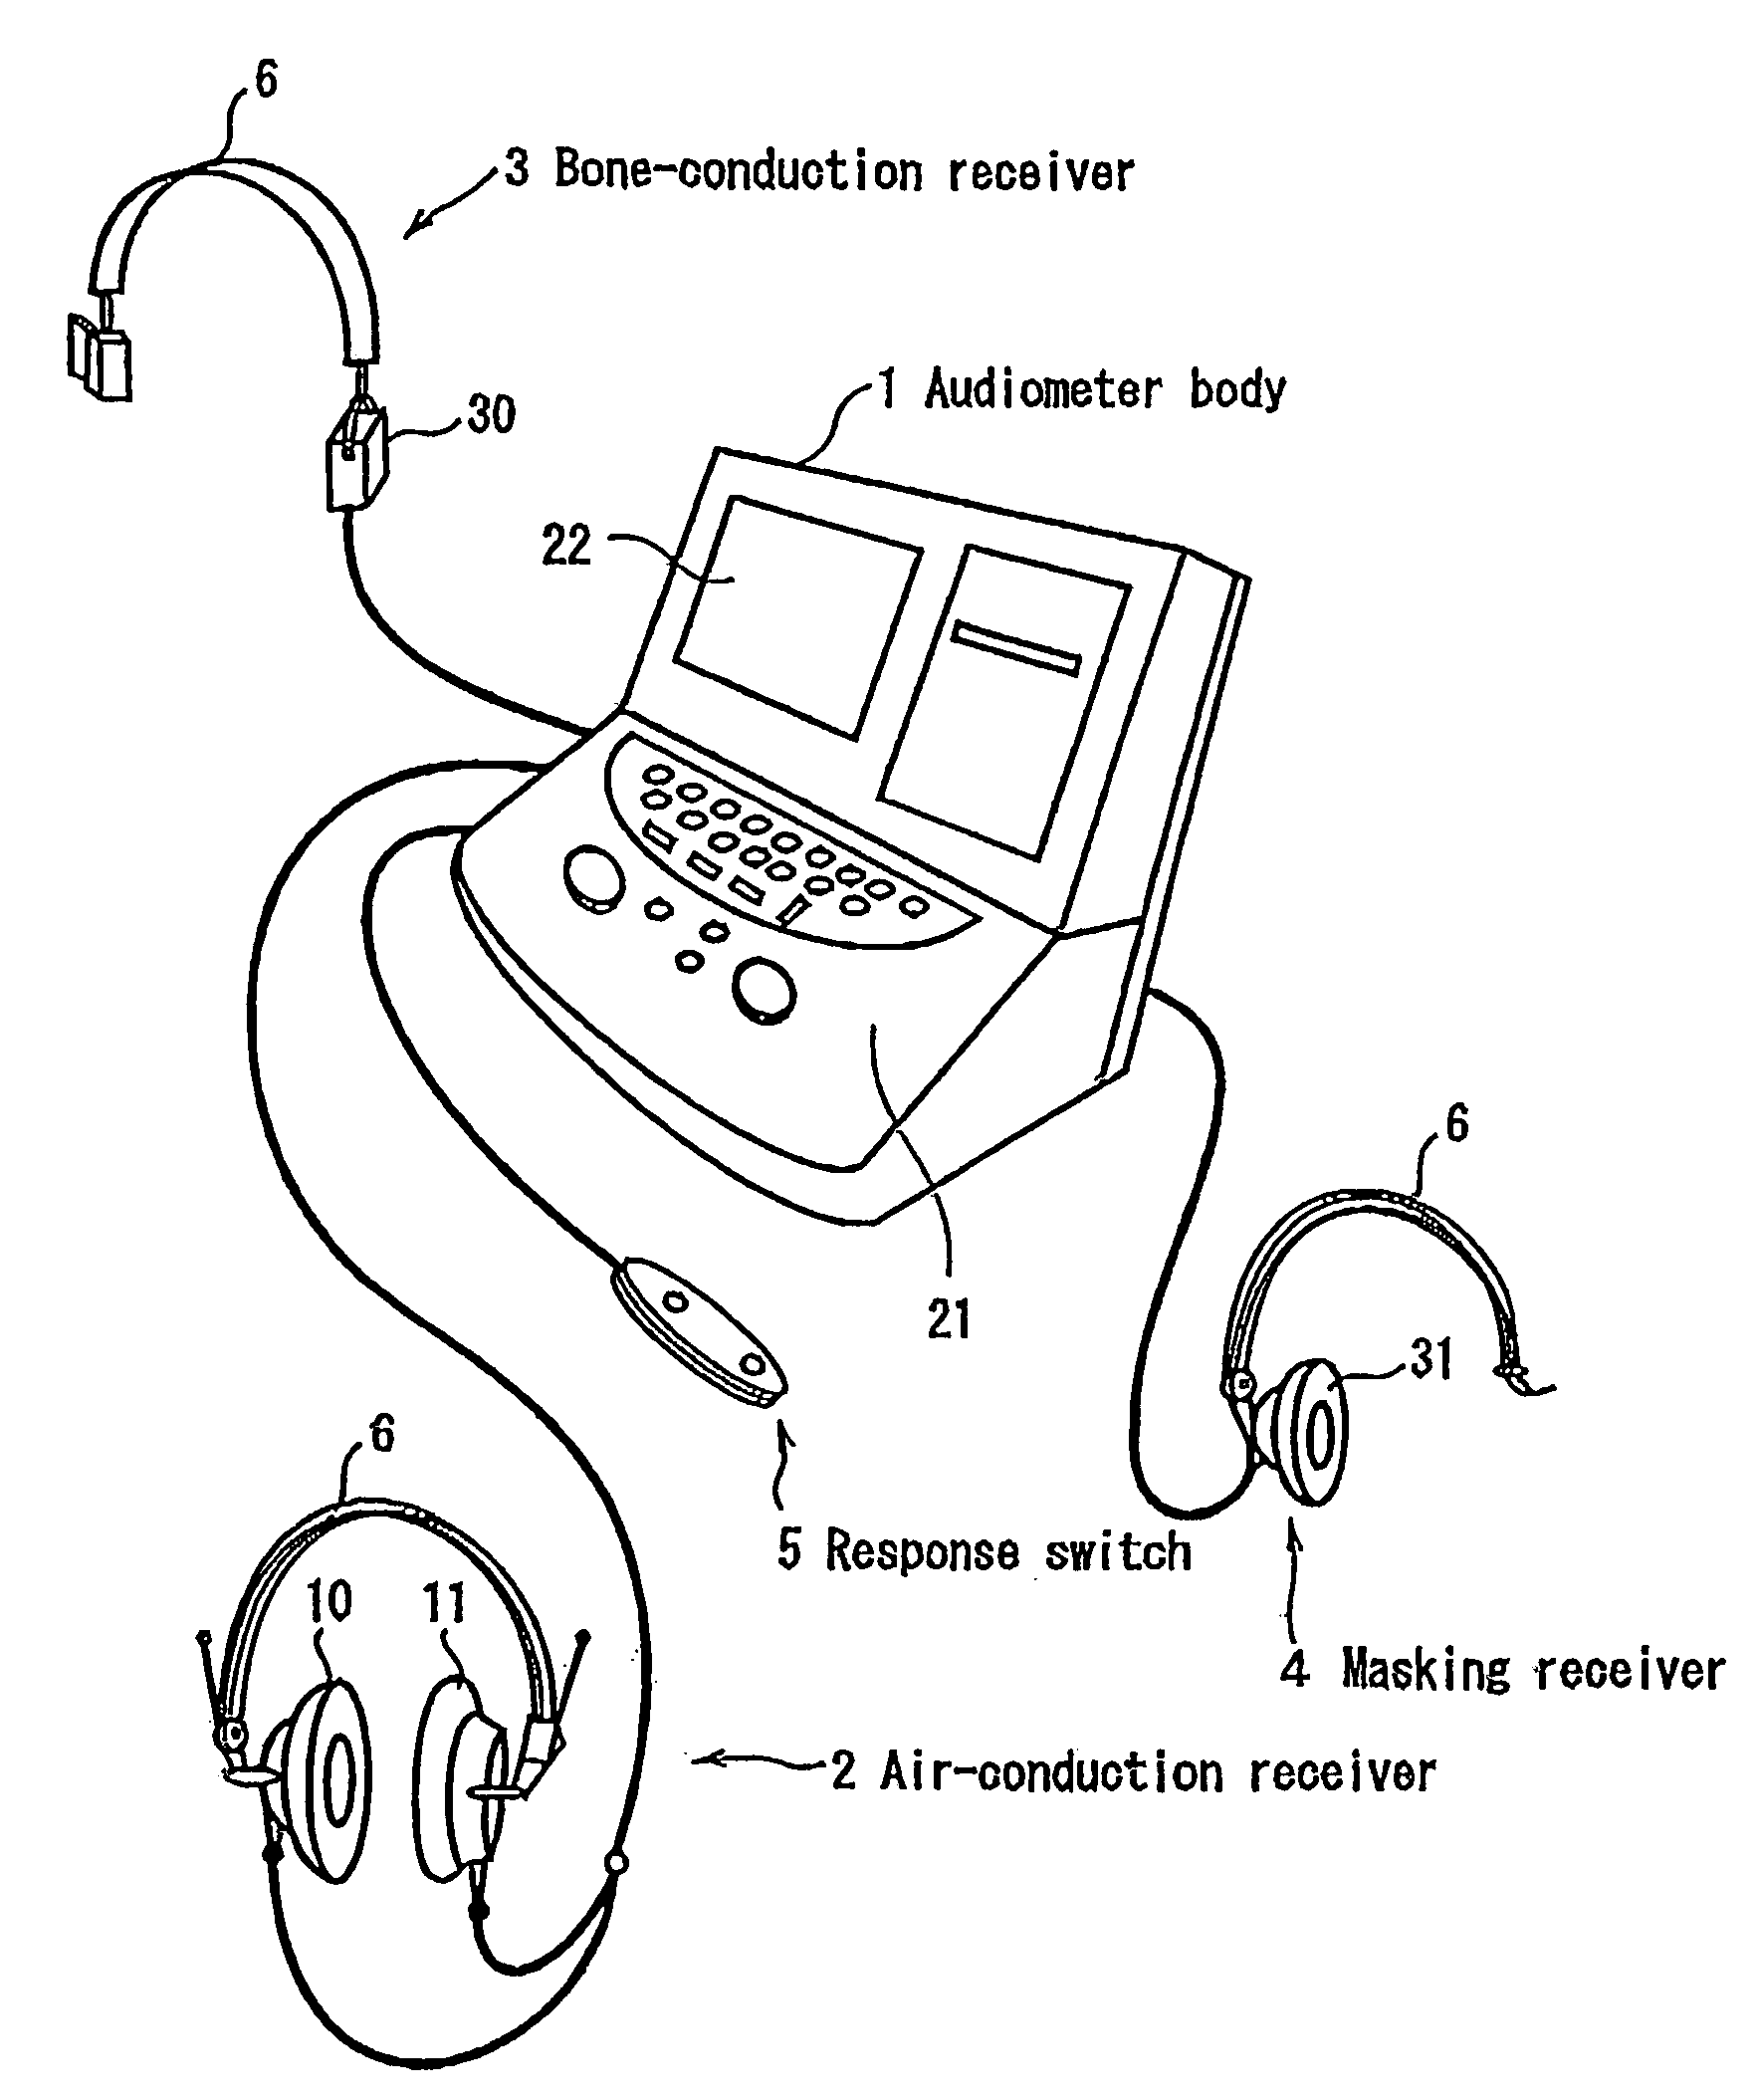 Audiometer receiver and audiometer